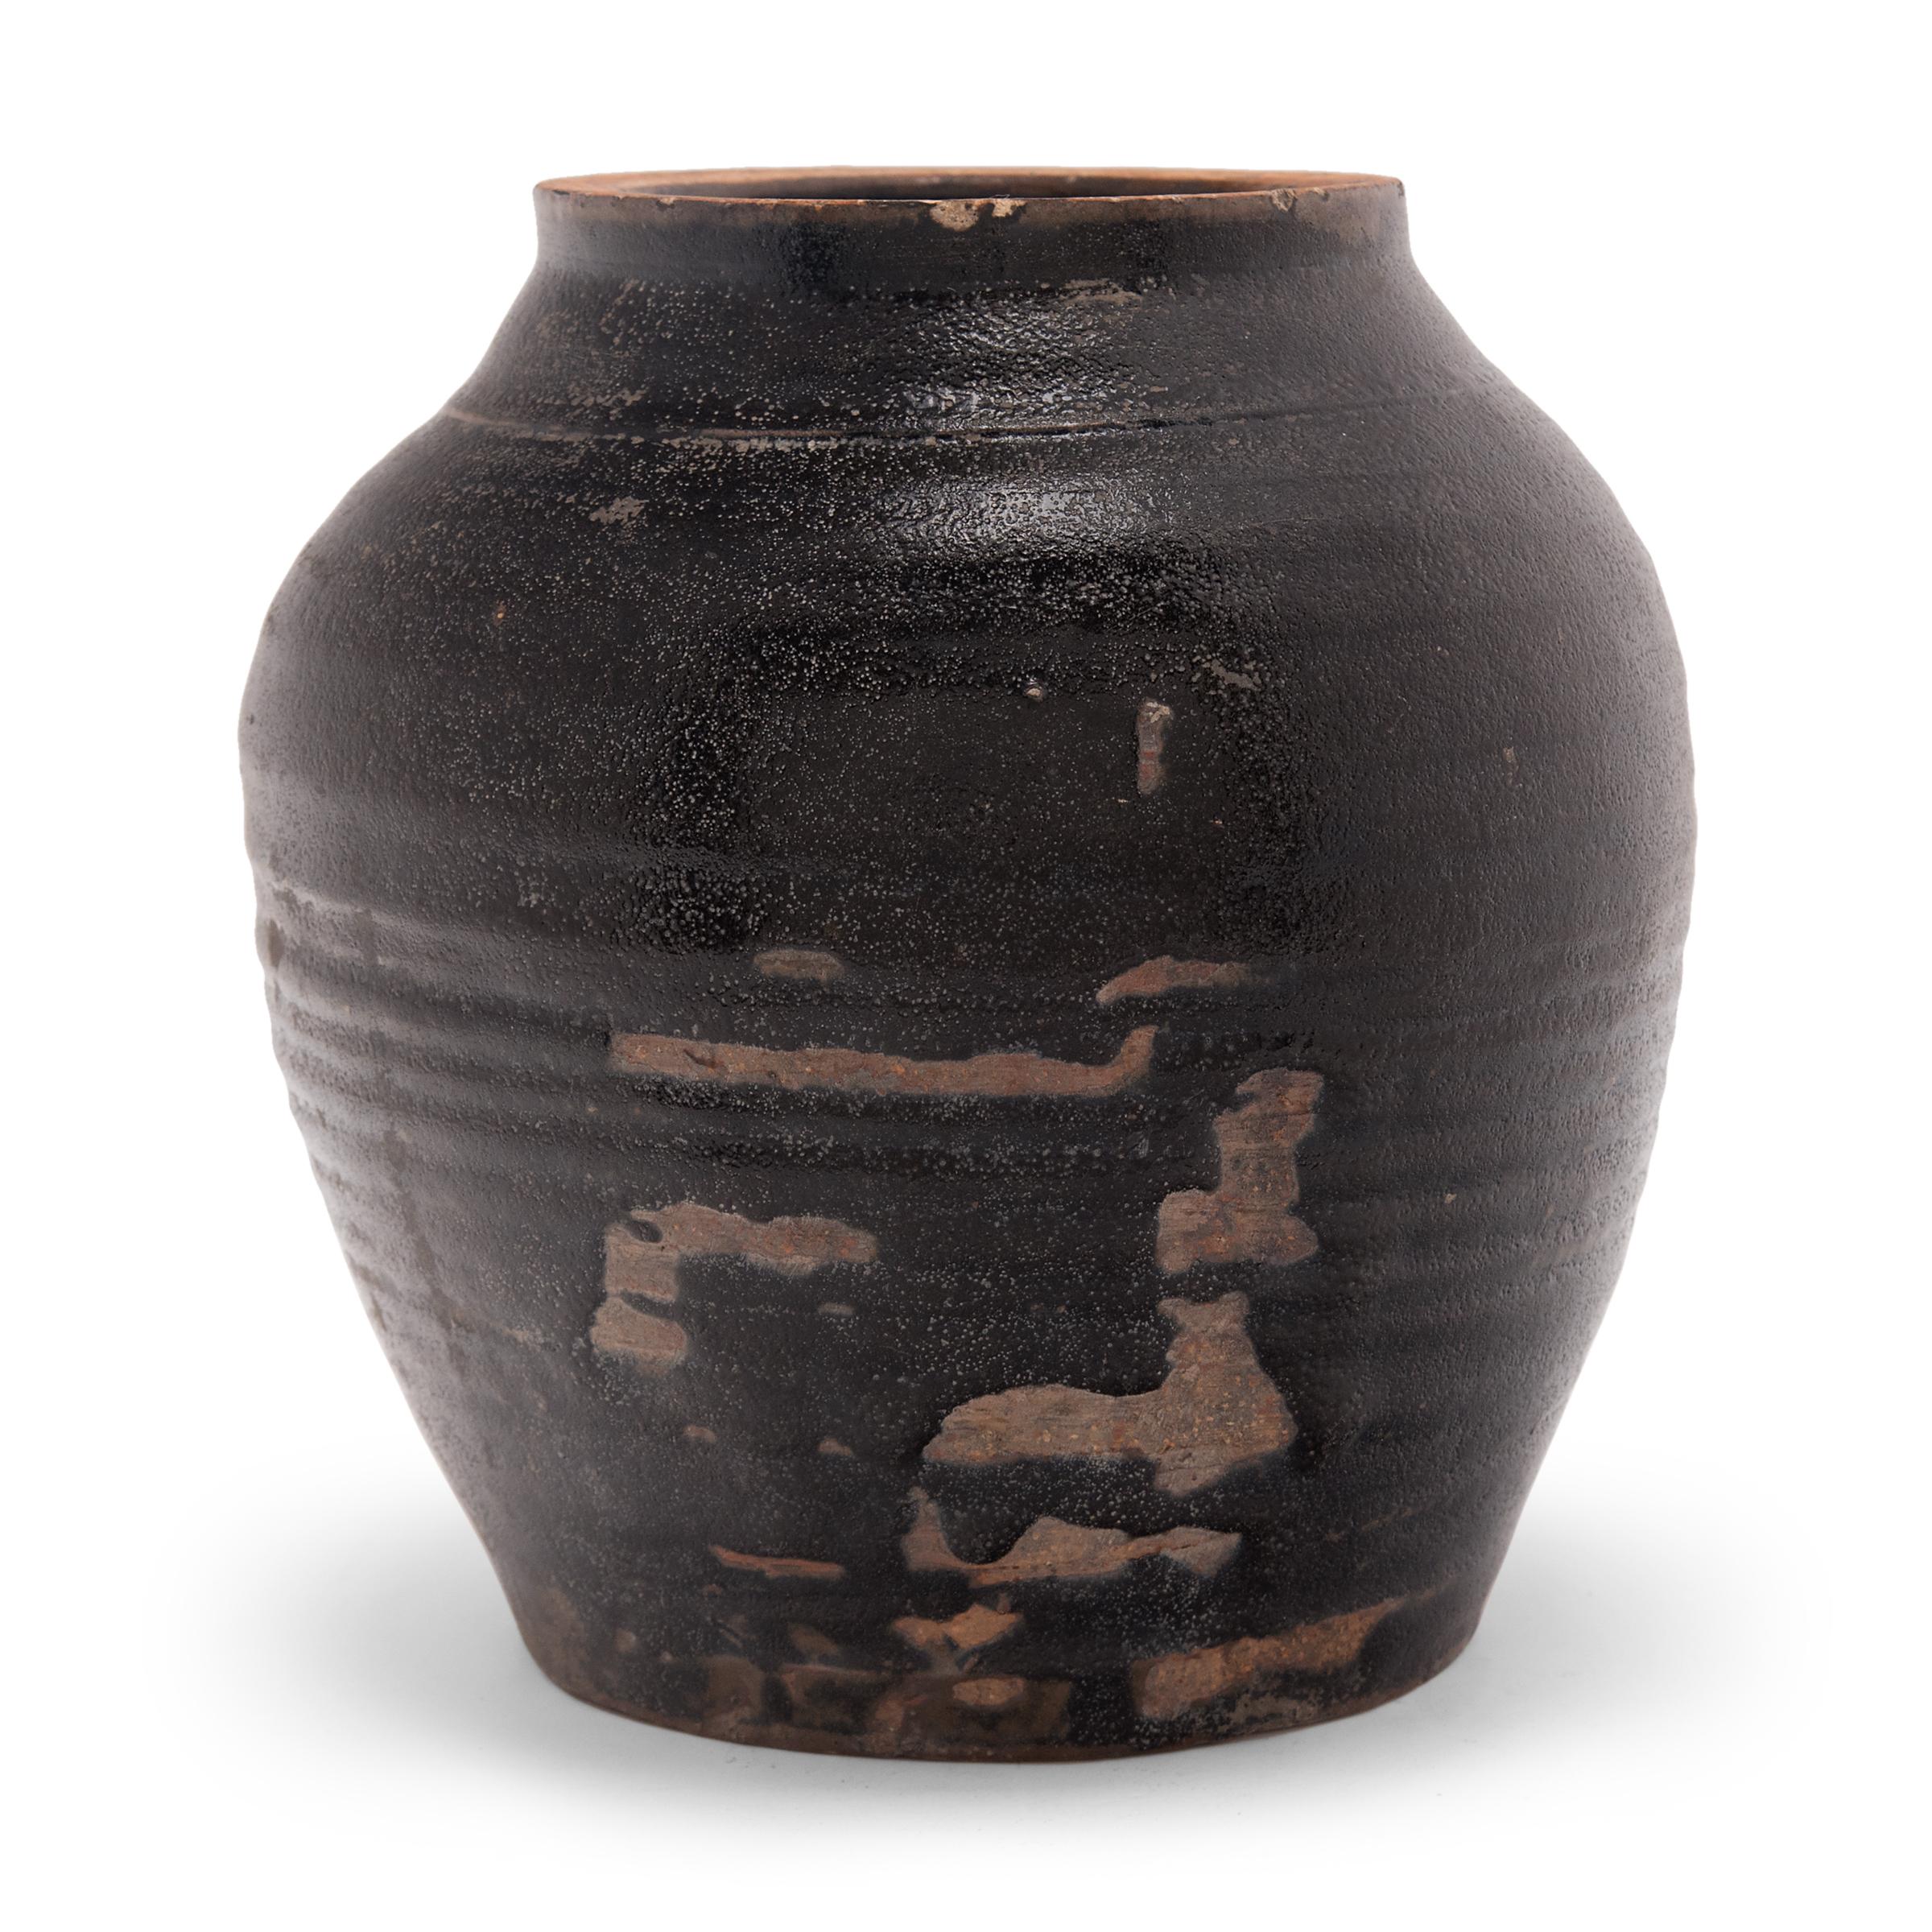 Rustic Chinese Brown Glazed Storage Jar, c. 1900